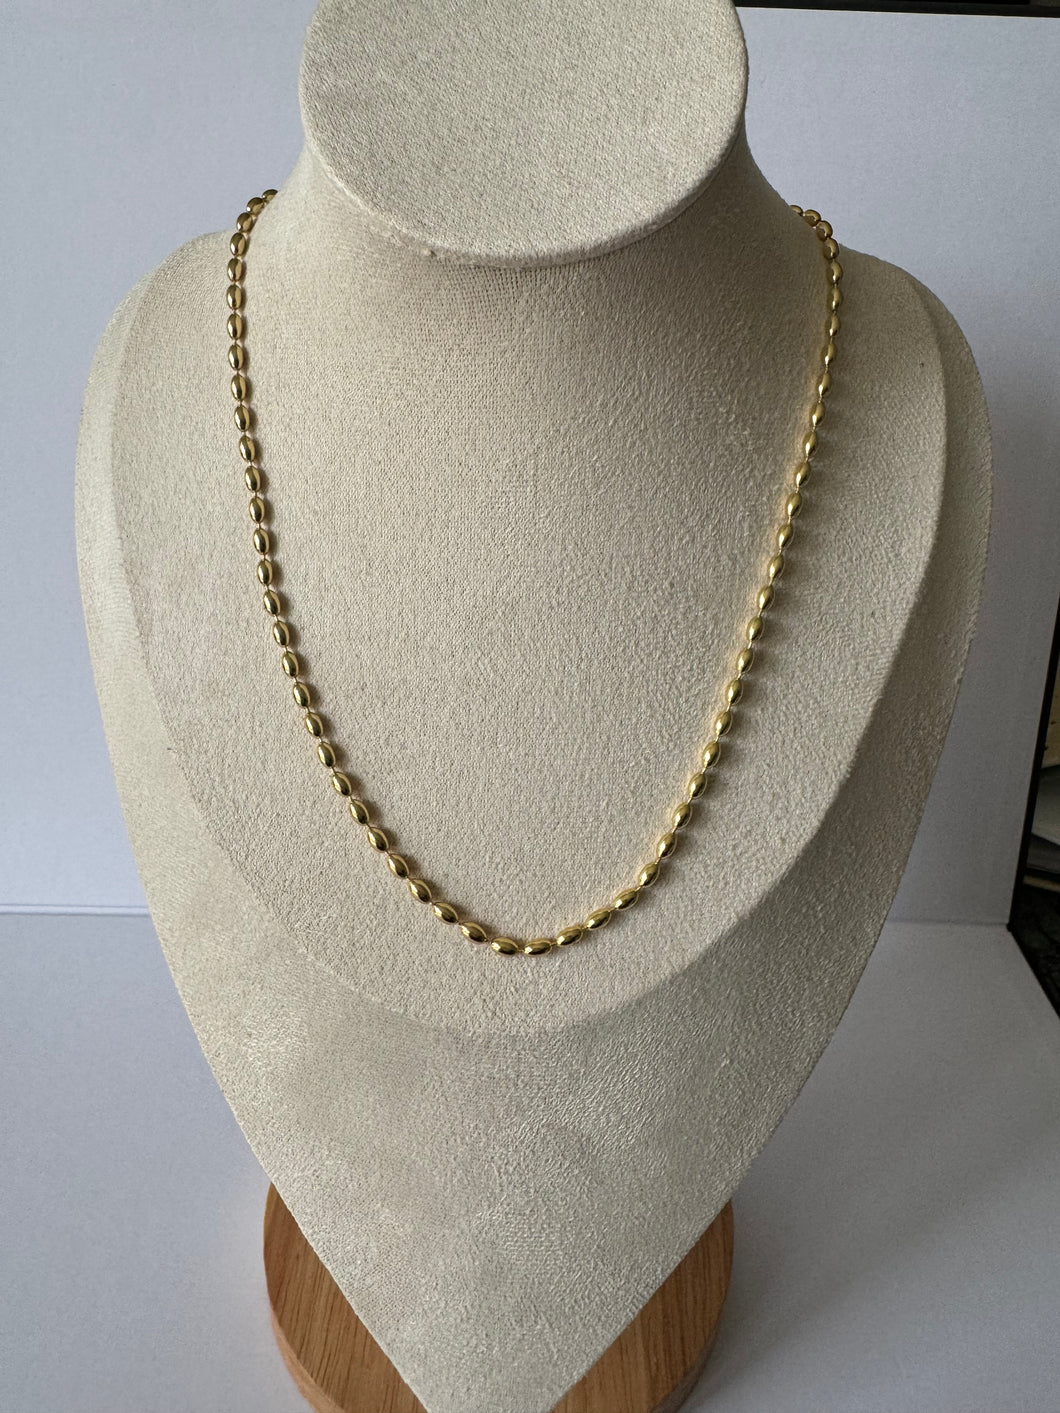 Oval Beads Chain